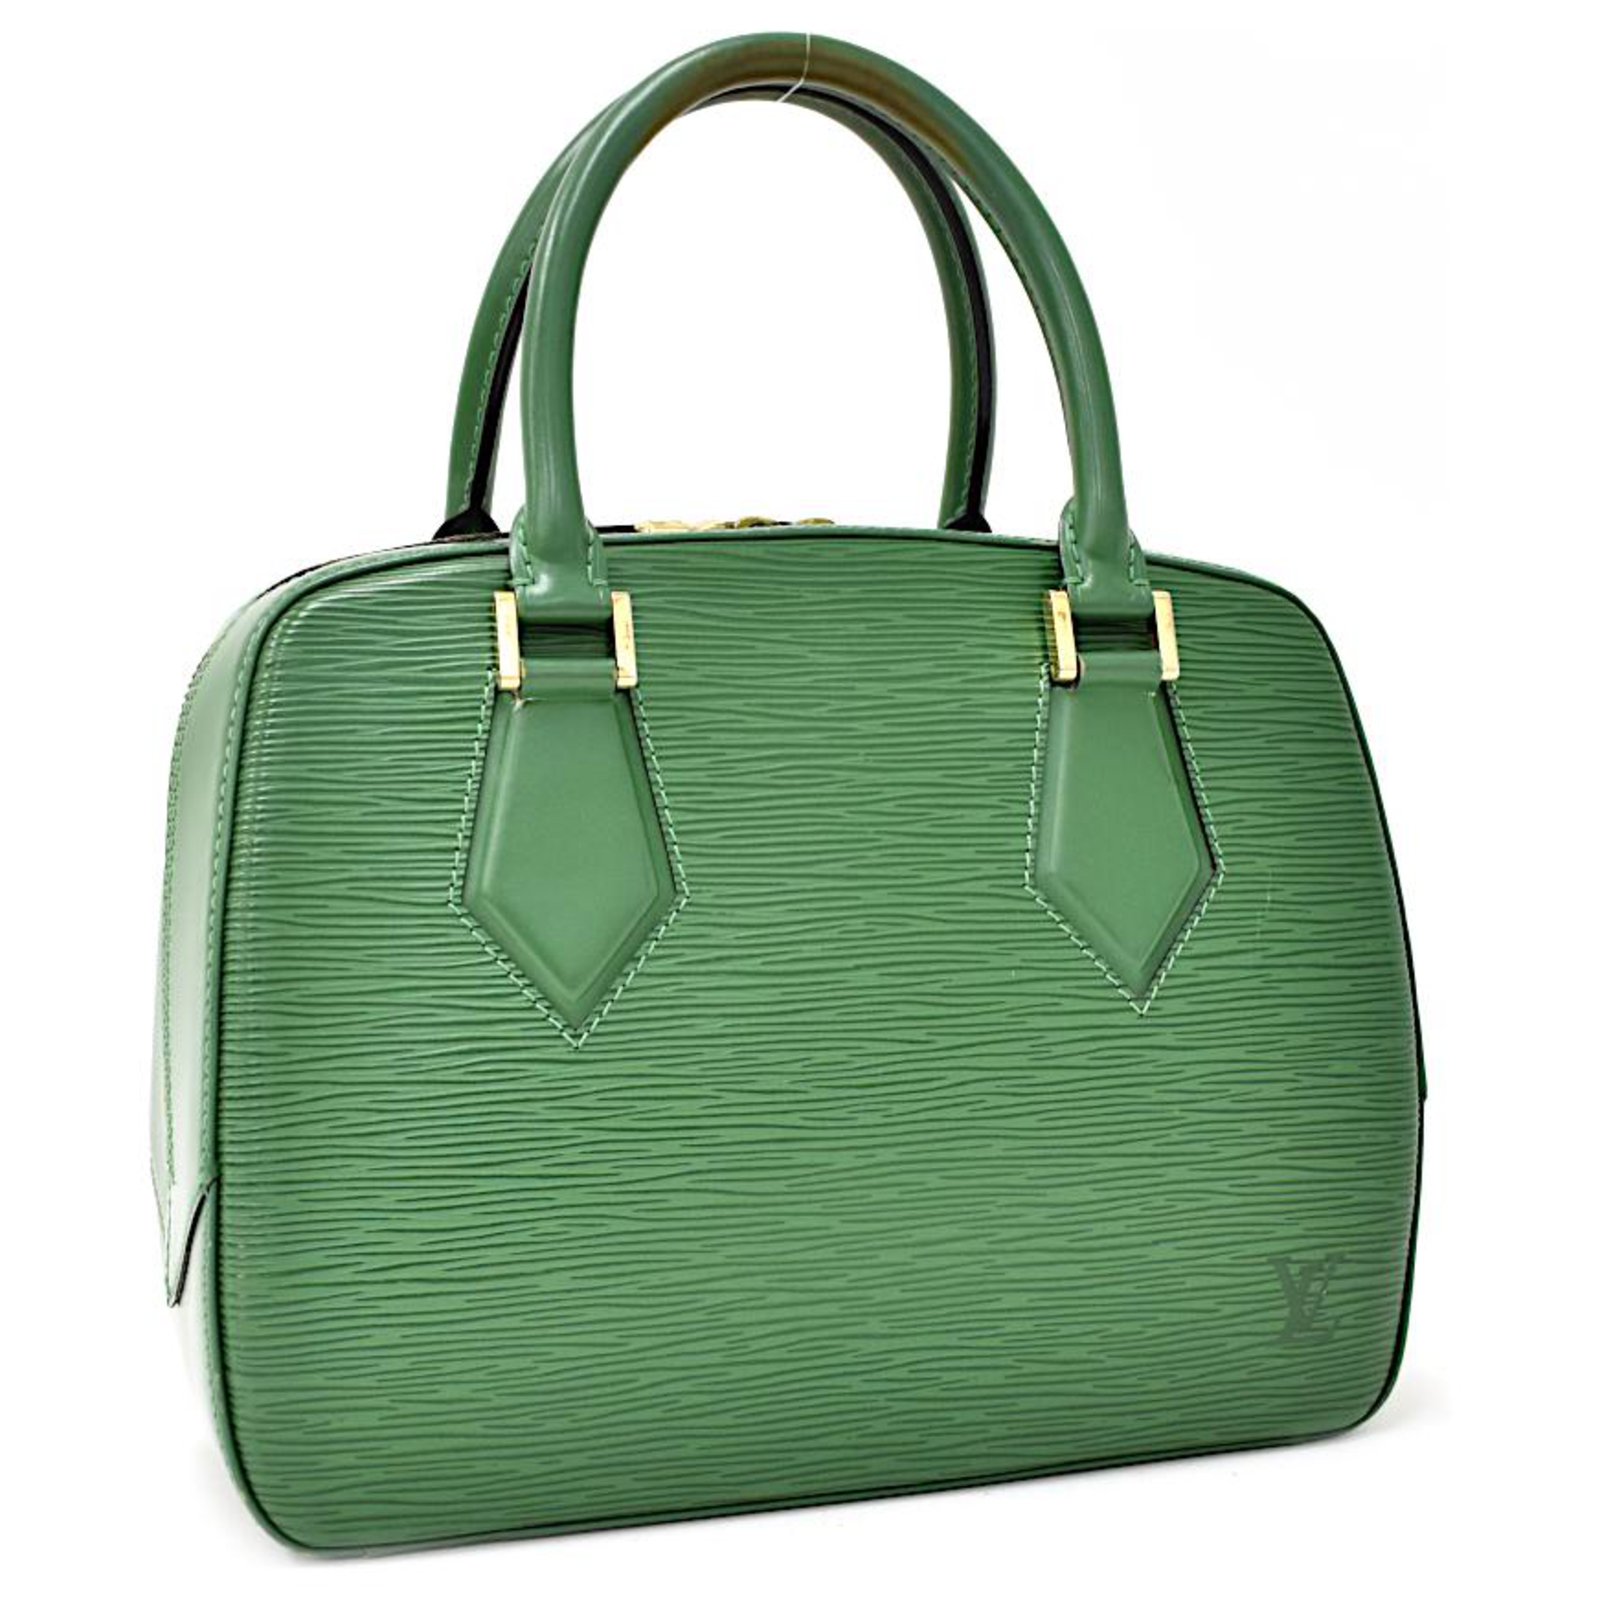 In Japan: Authentic Louis Vuitton Epi Green Leather Sablons Bag